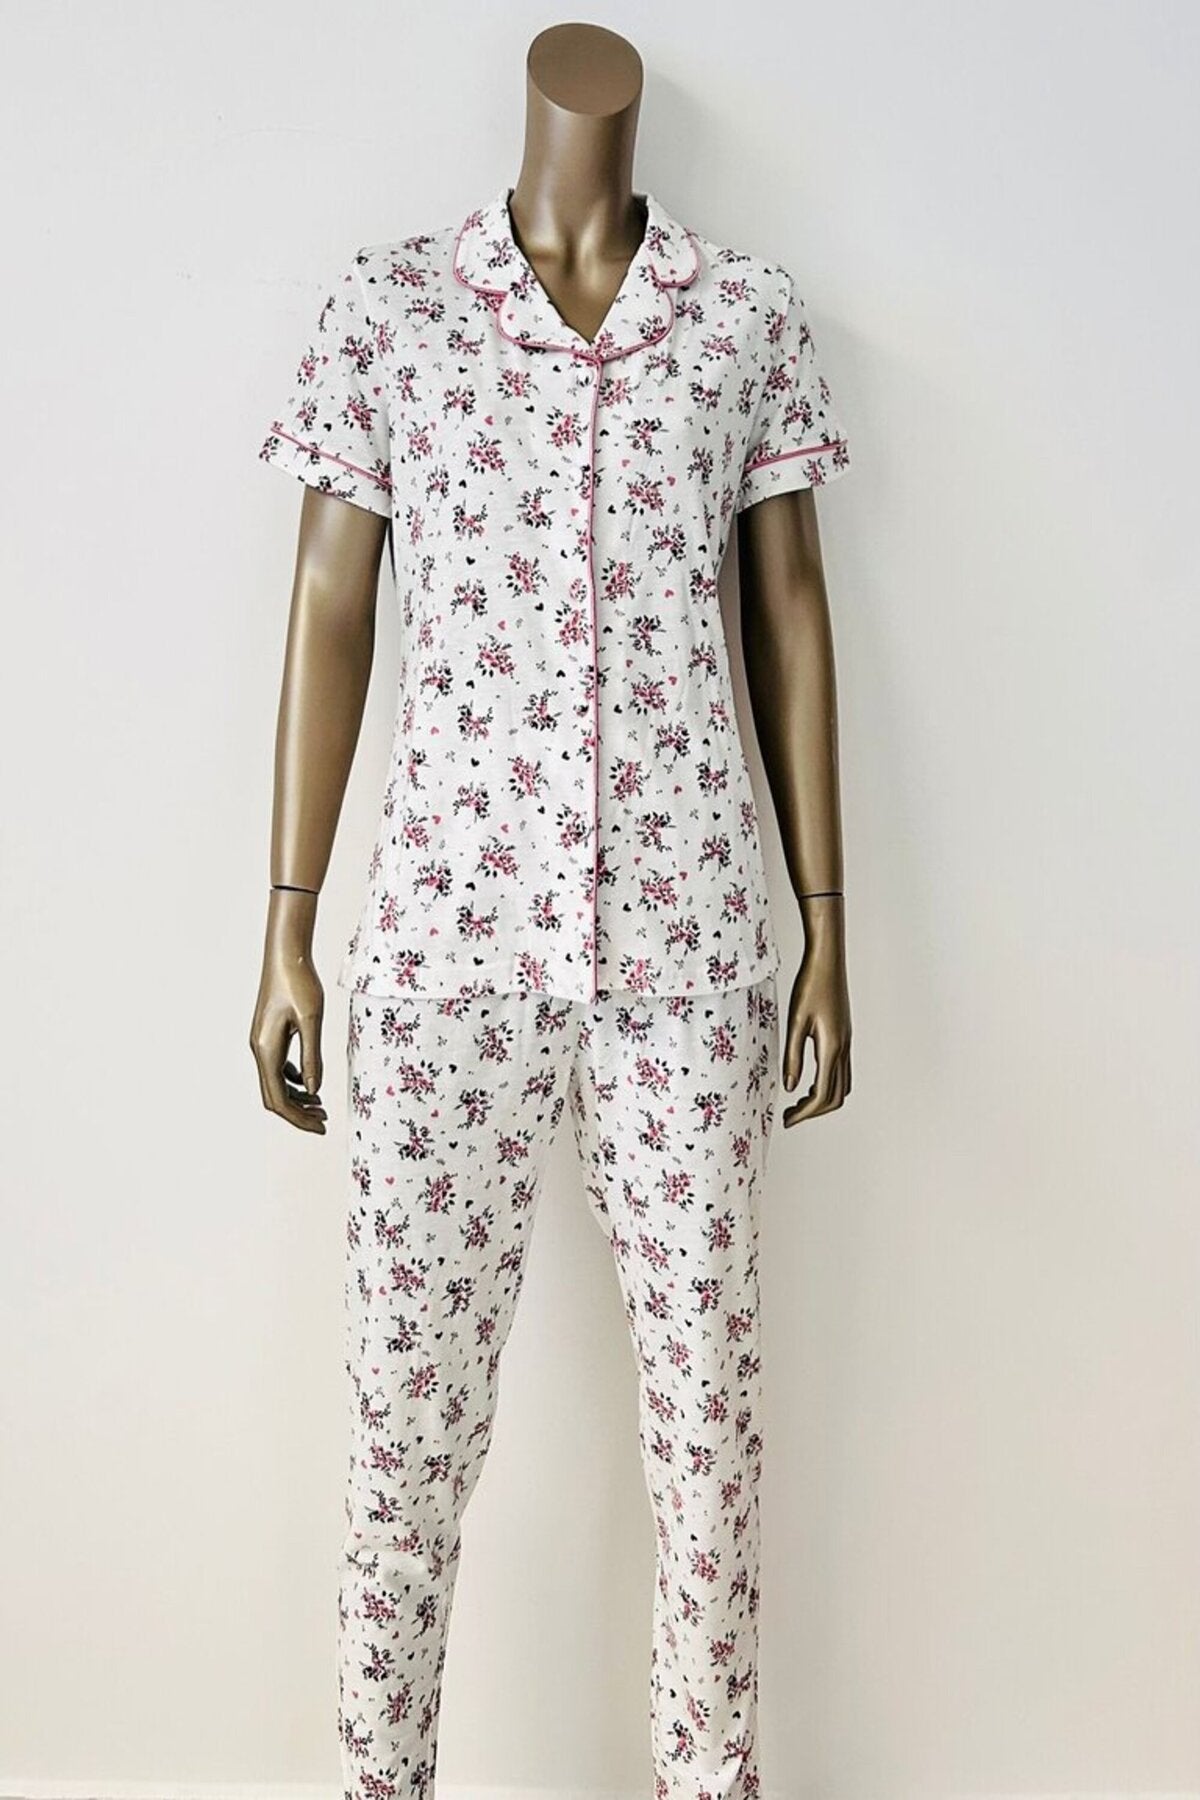 S&L Collar Button Short Sleeve Pajama